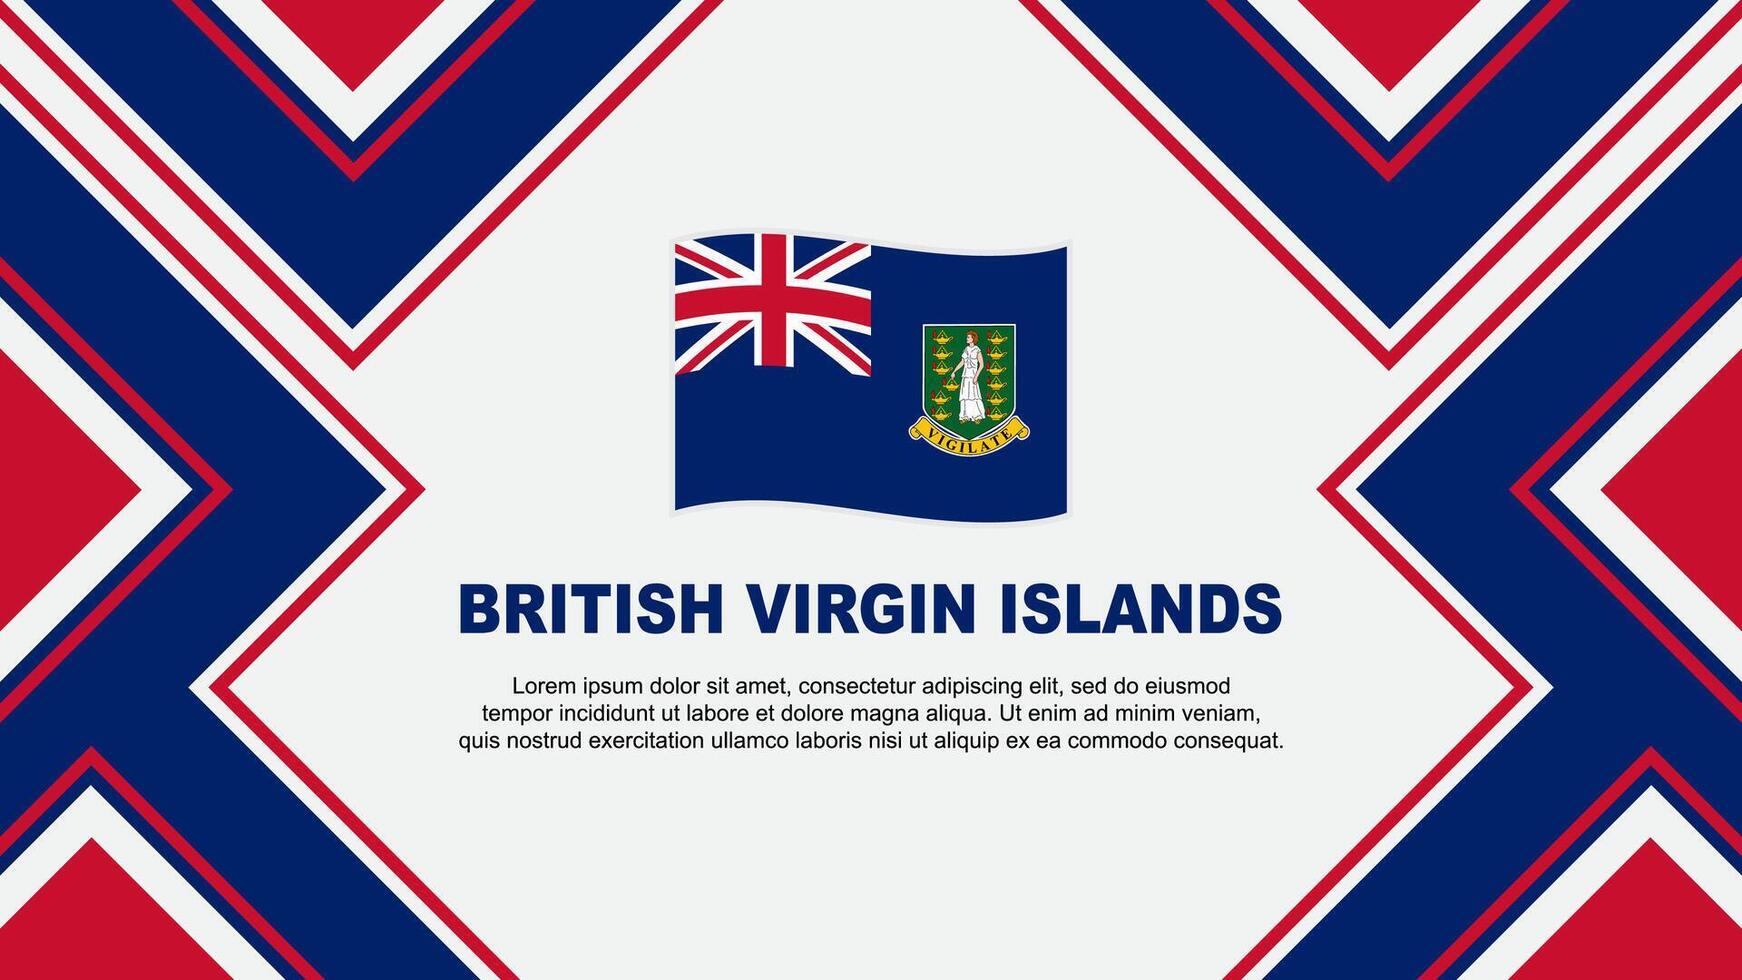 British Virgin Islands Flag Abstract Background Design Template. British Virgin Islands Independence Day Banner Wallpaper Vector Illustration. Vector